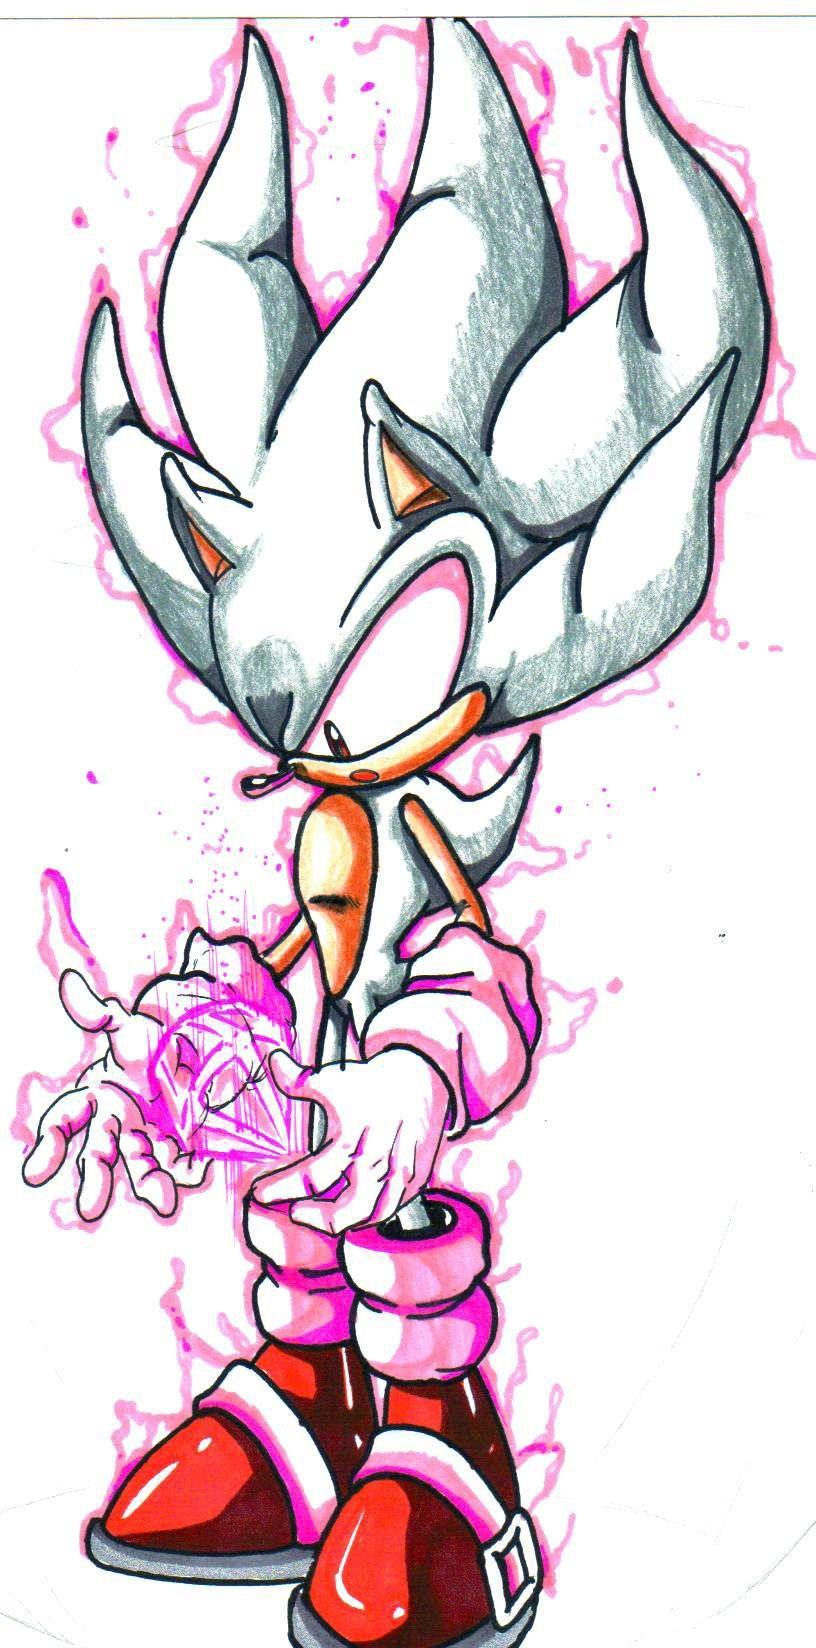 Sonic The Hedgehog (SEGA)